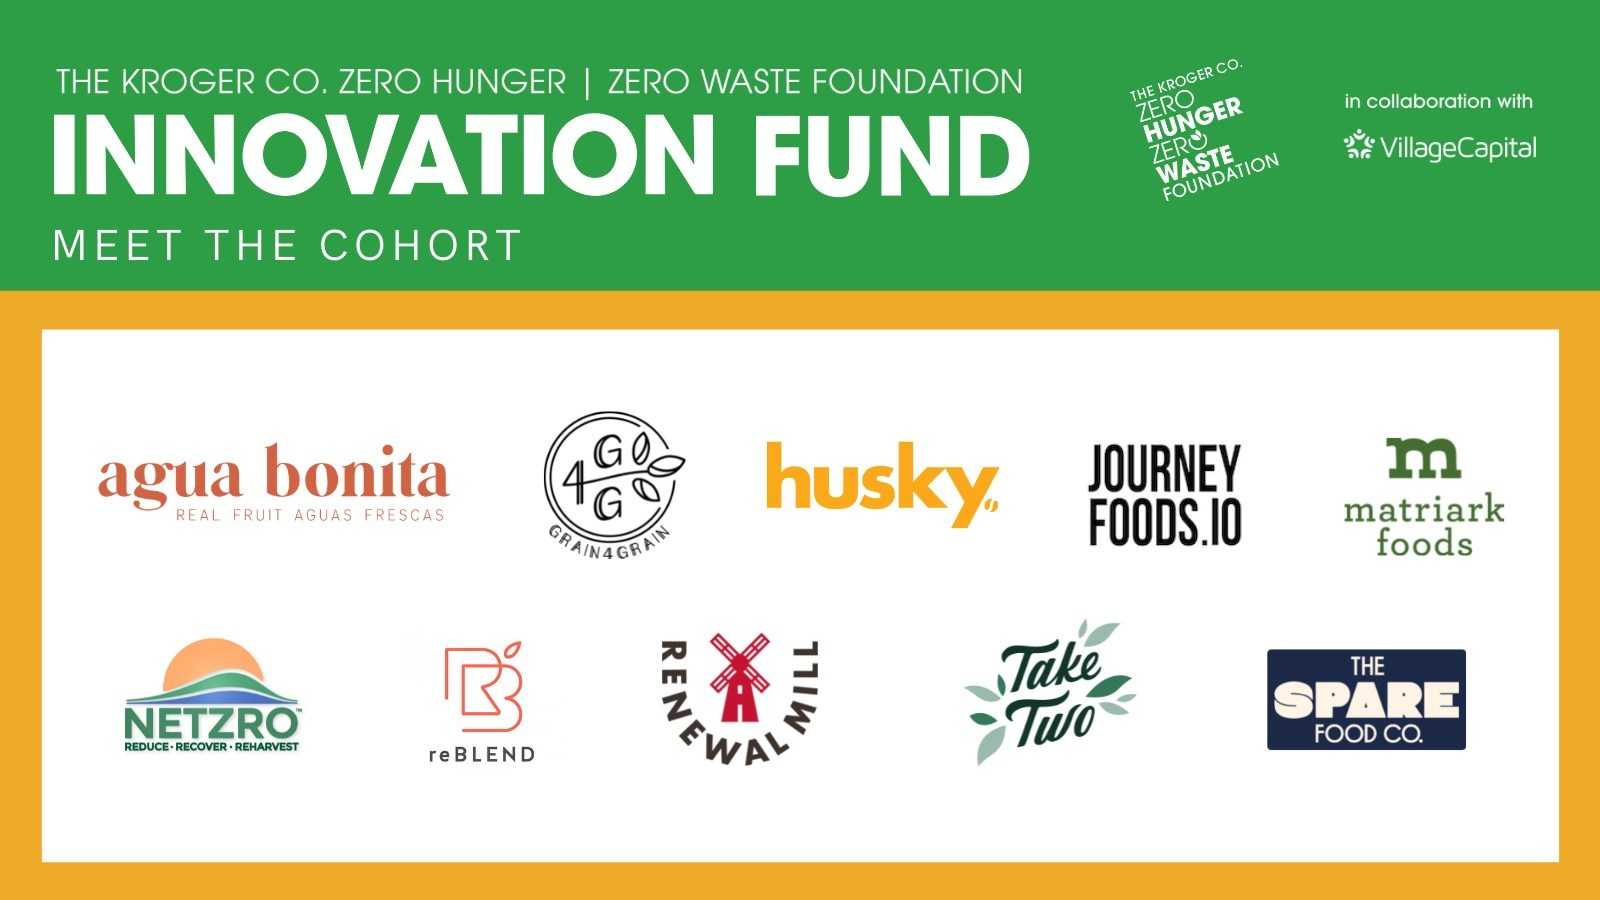 Zero Waste Foundation